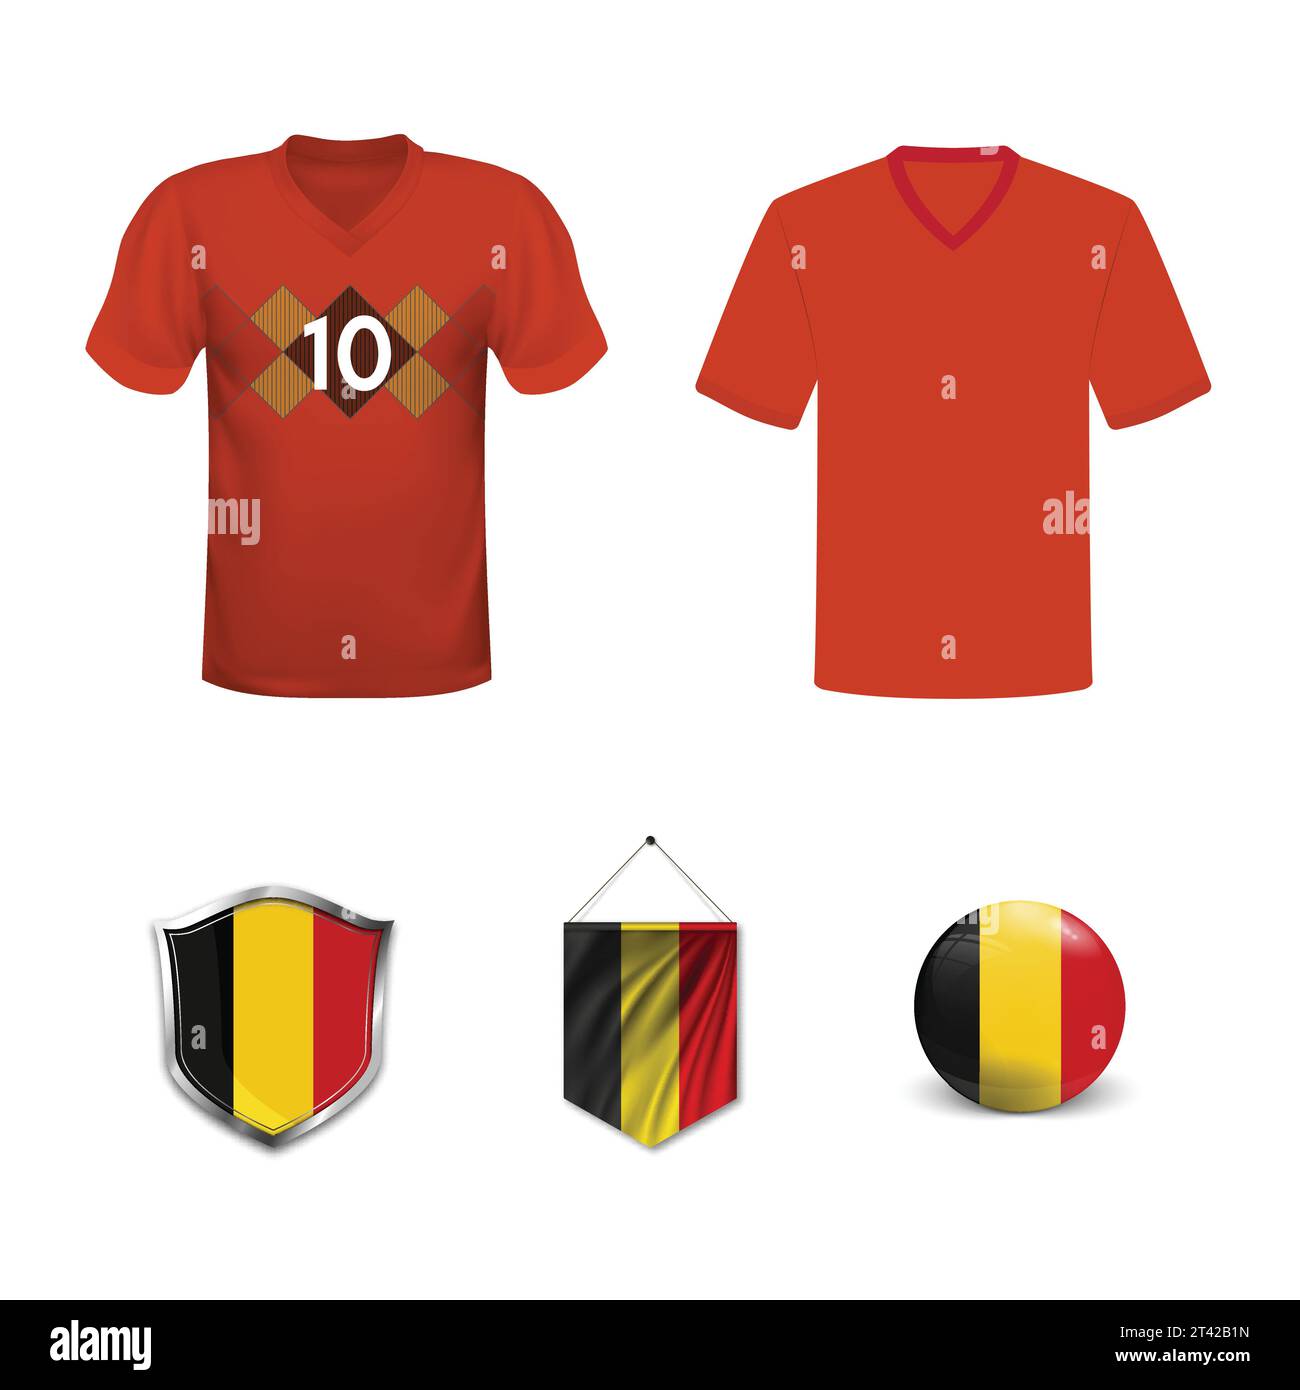 Belgium national soccer team shirt in generic Vector Image Stock Vector